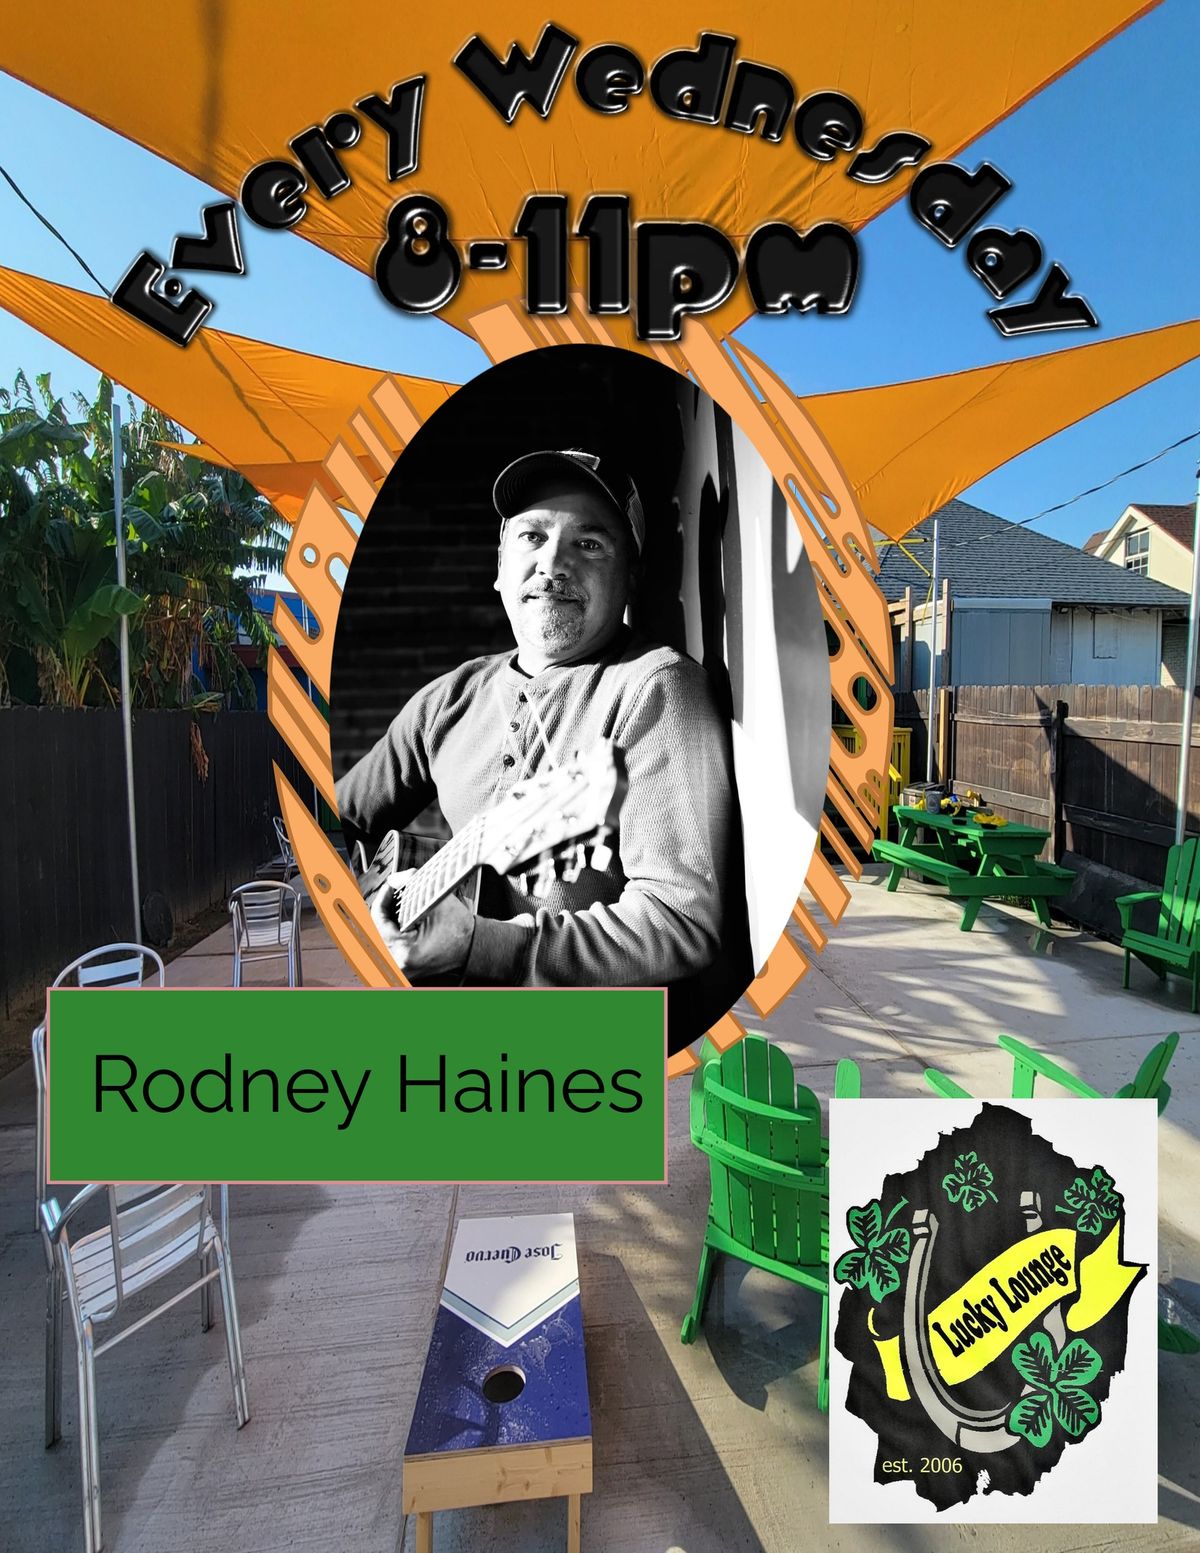 Wednesdays with Rodney Haines